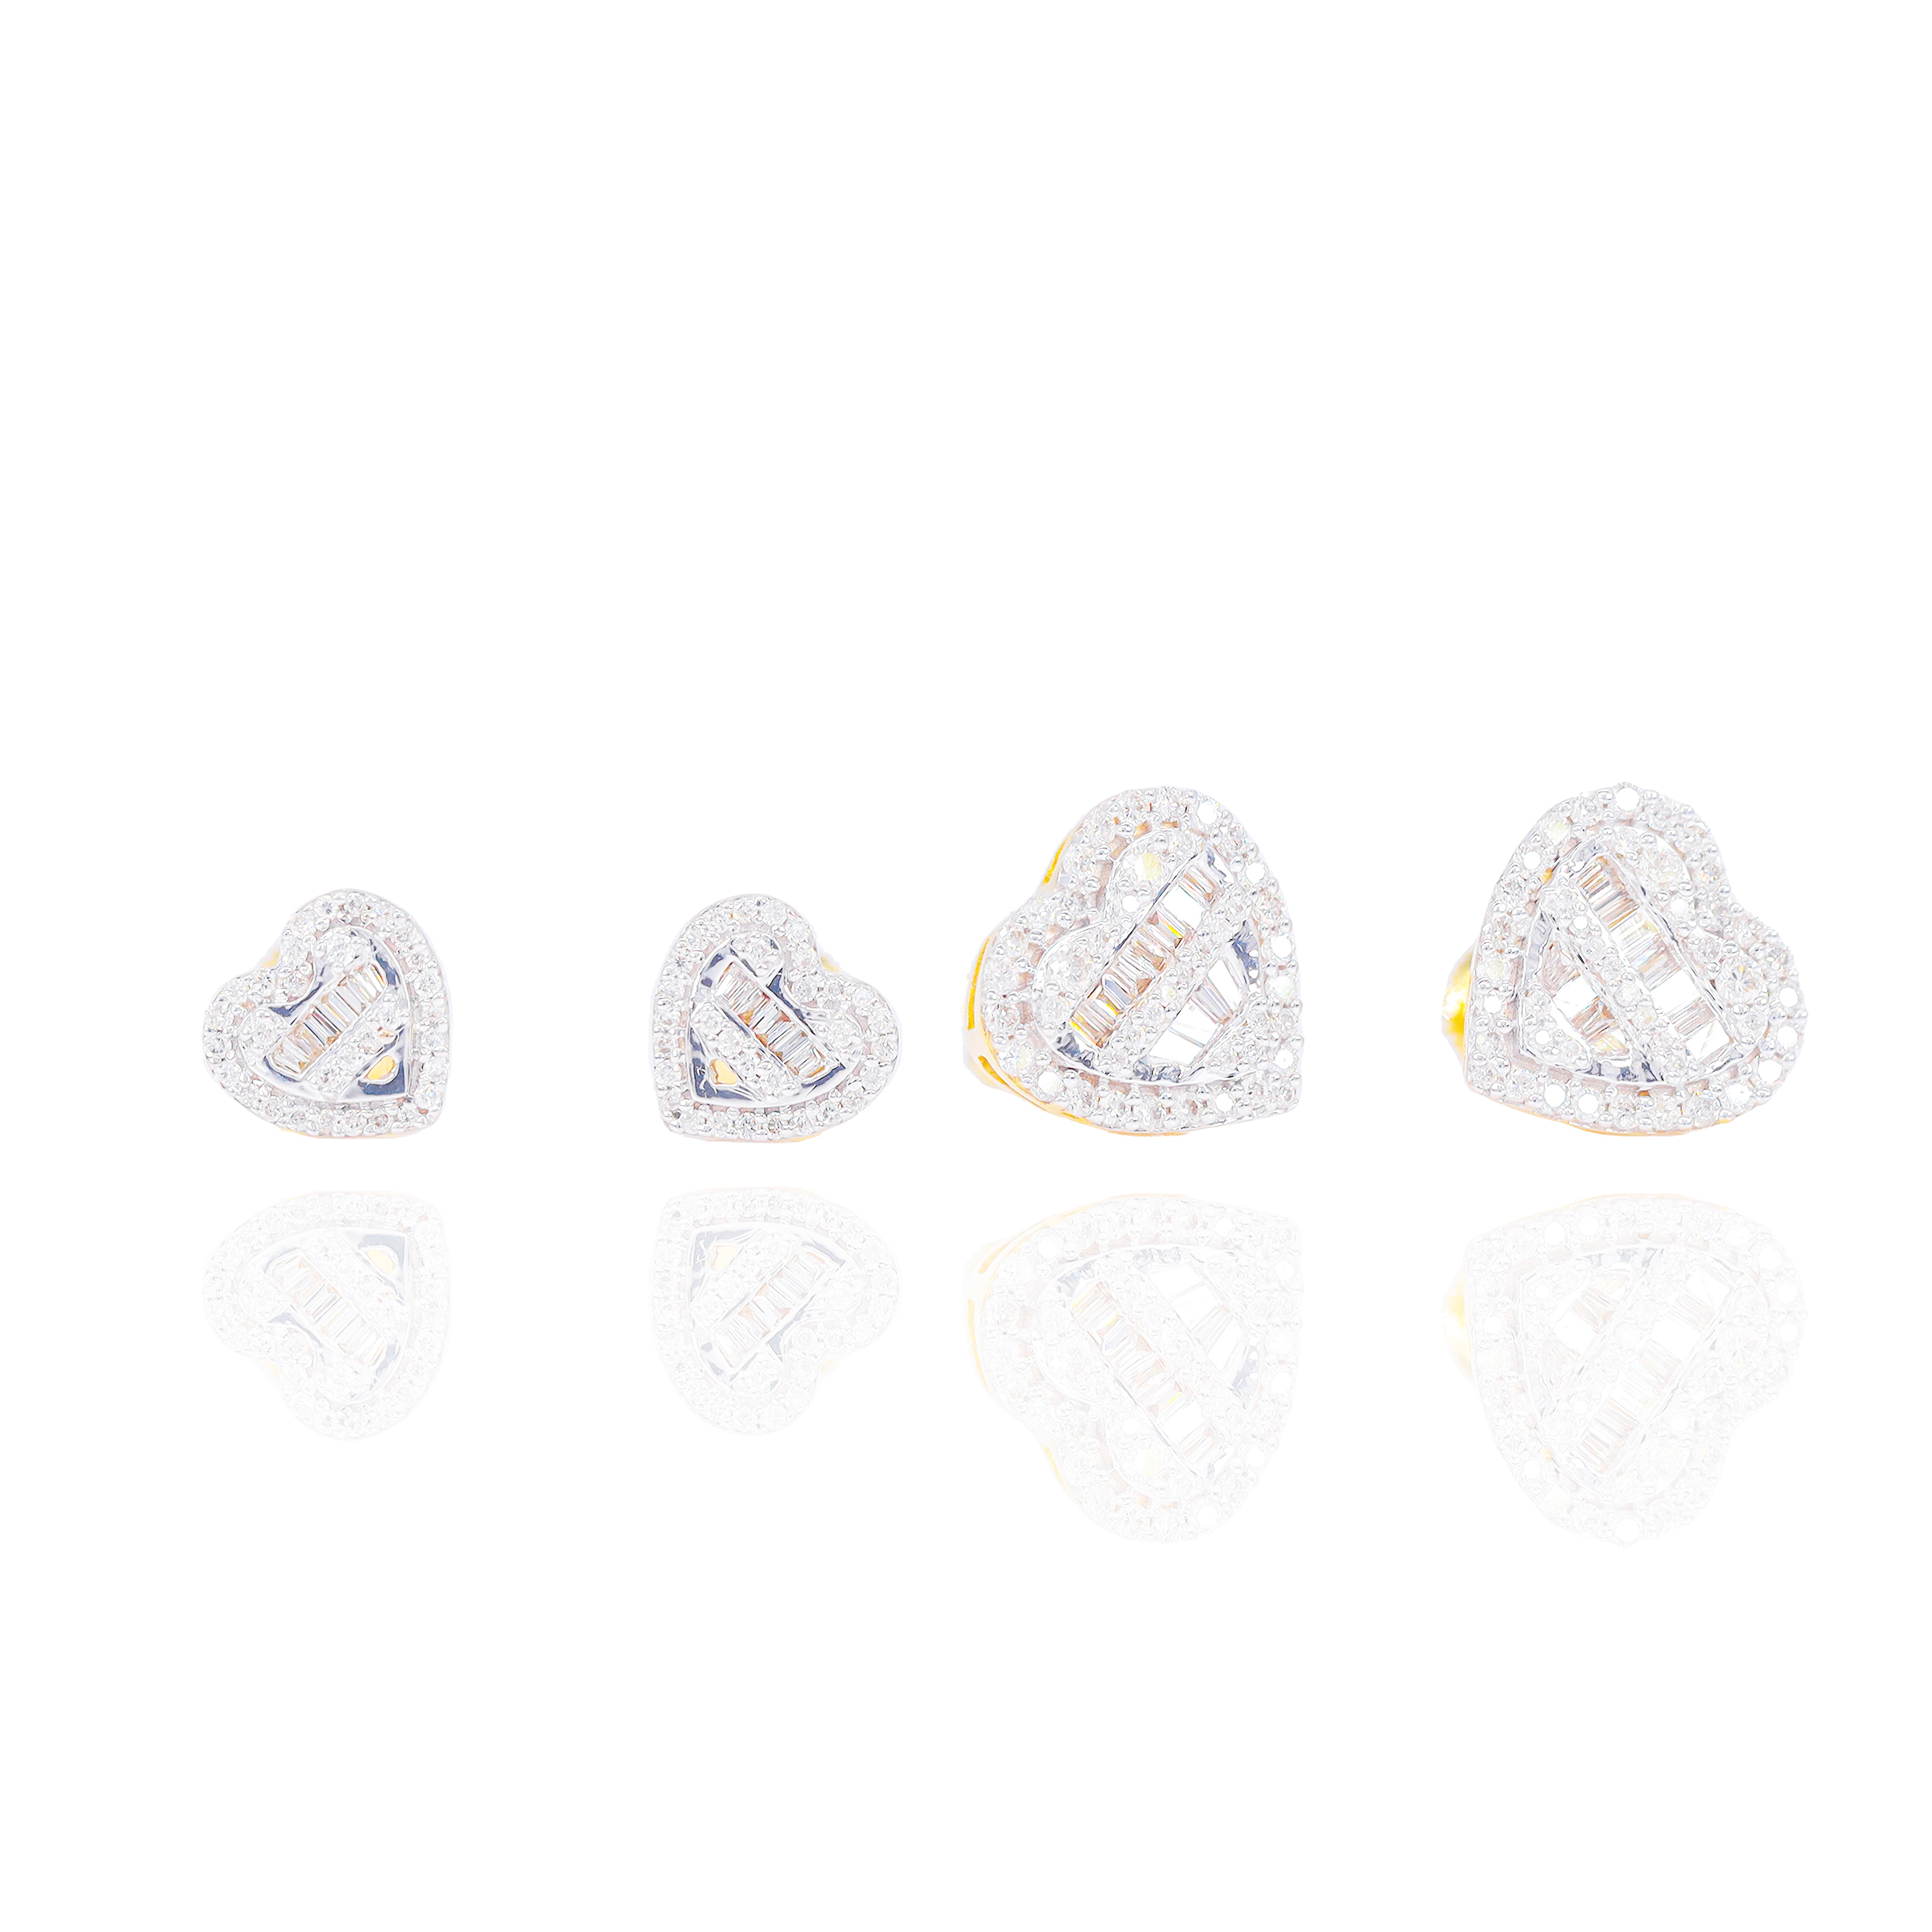 Heart Shaped Diamond Earrings with Baguette Center